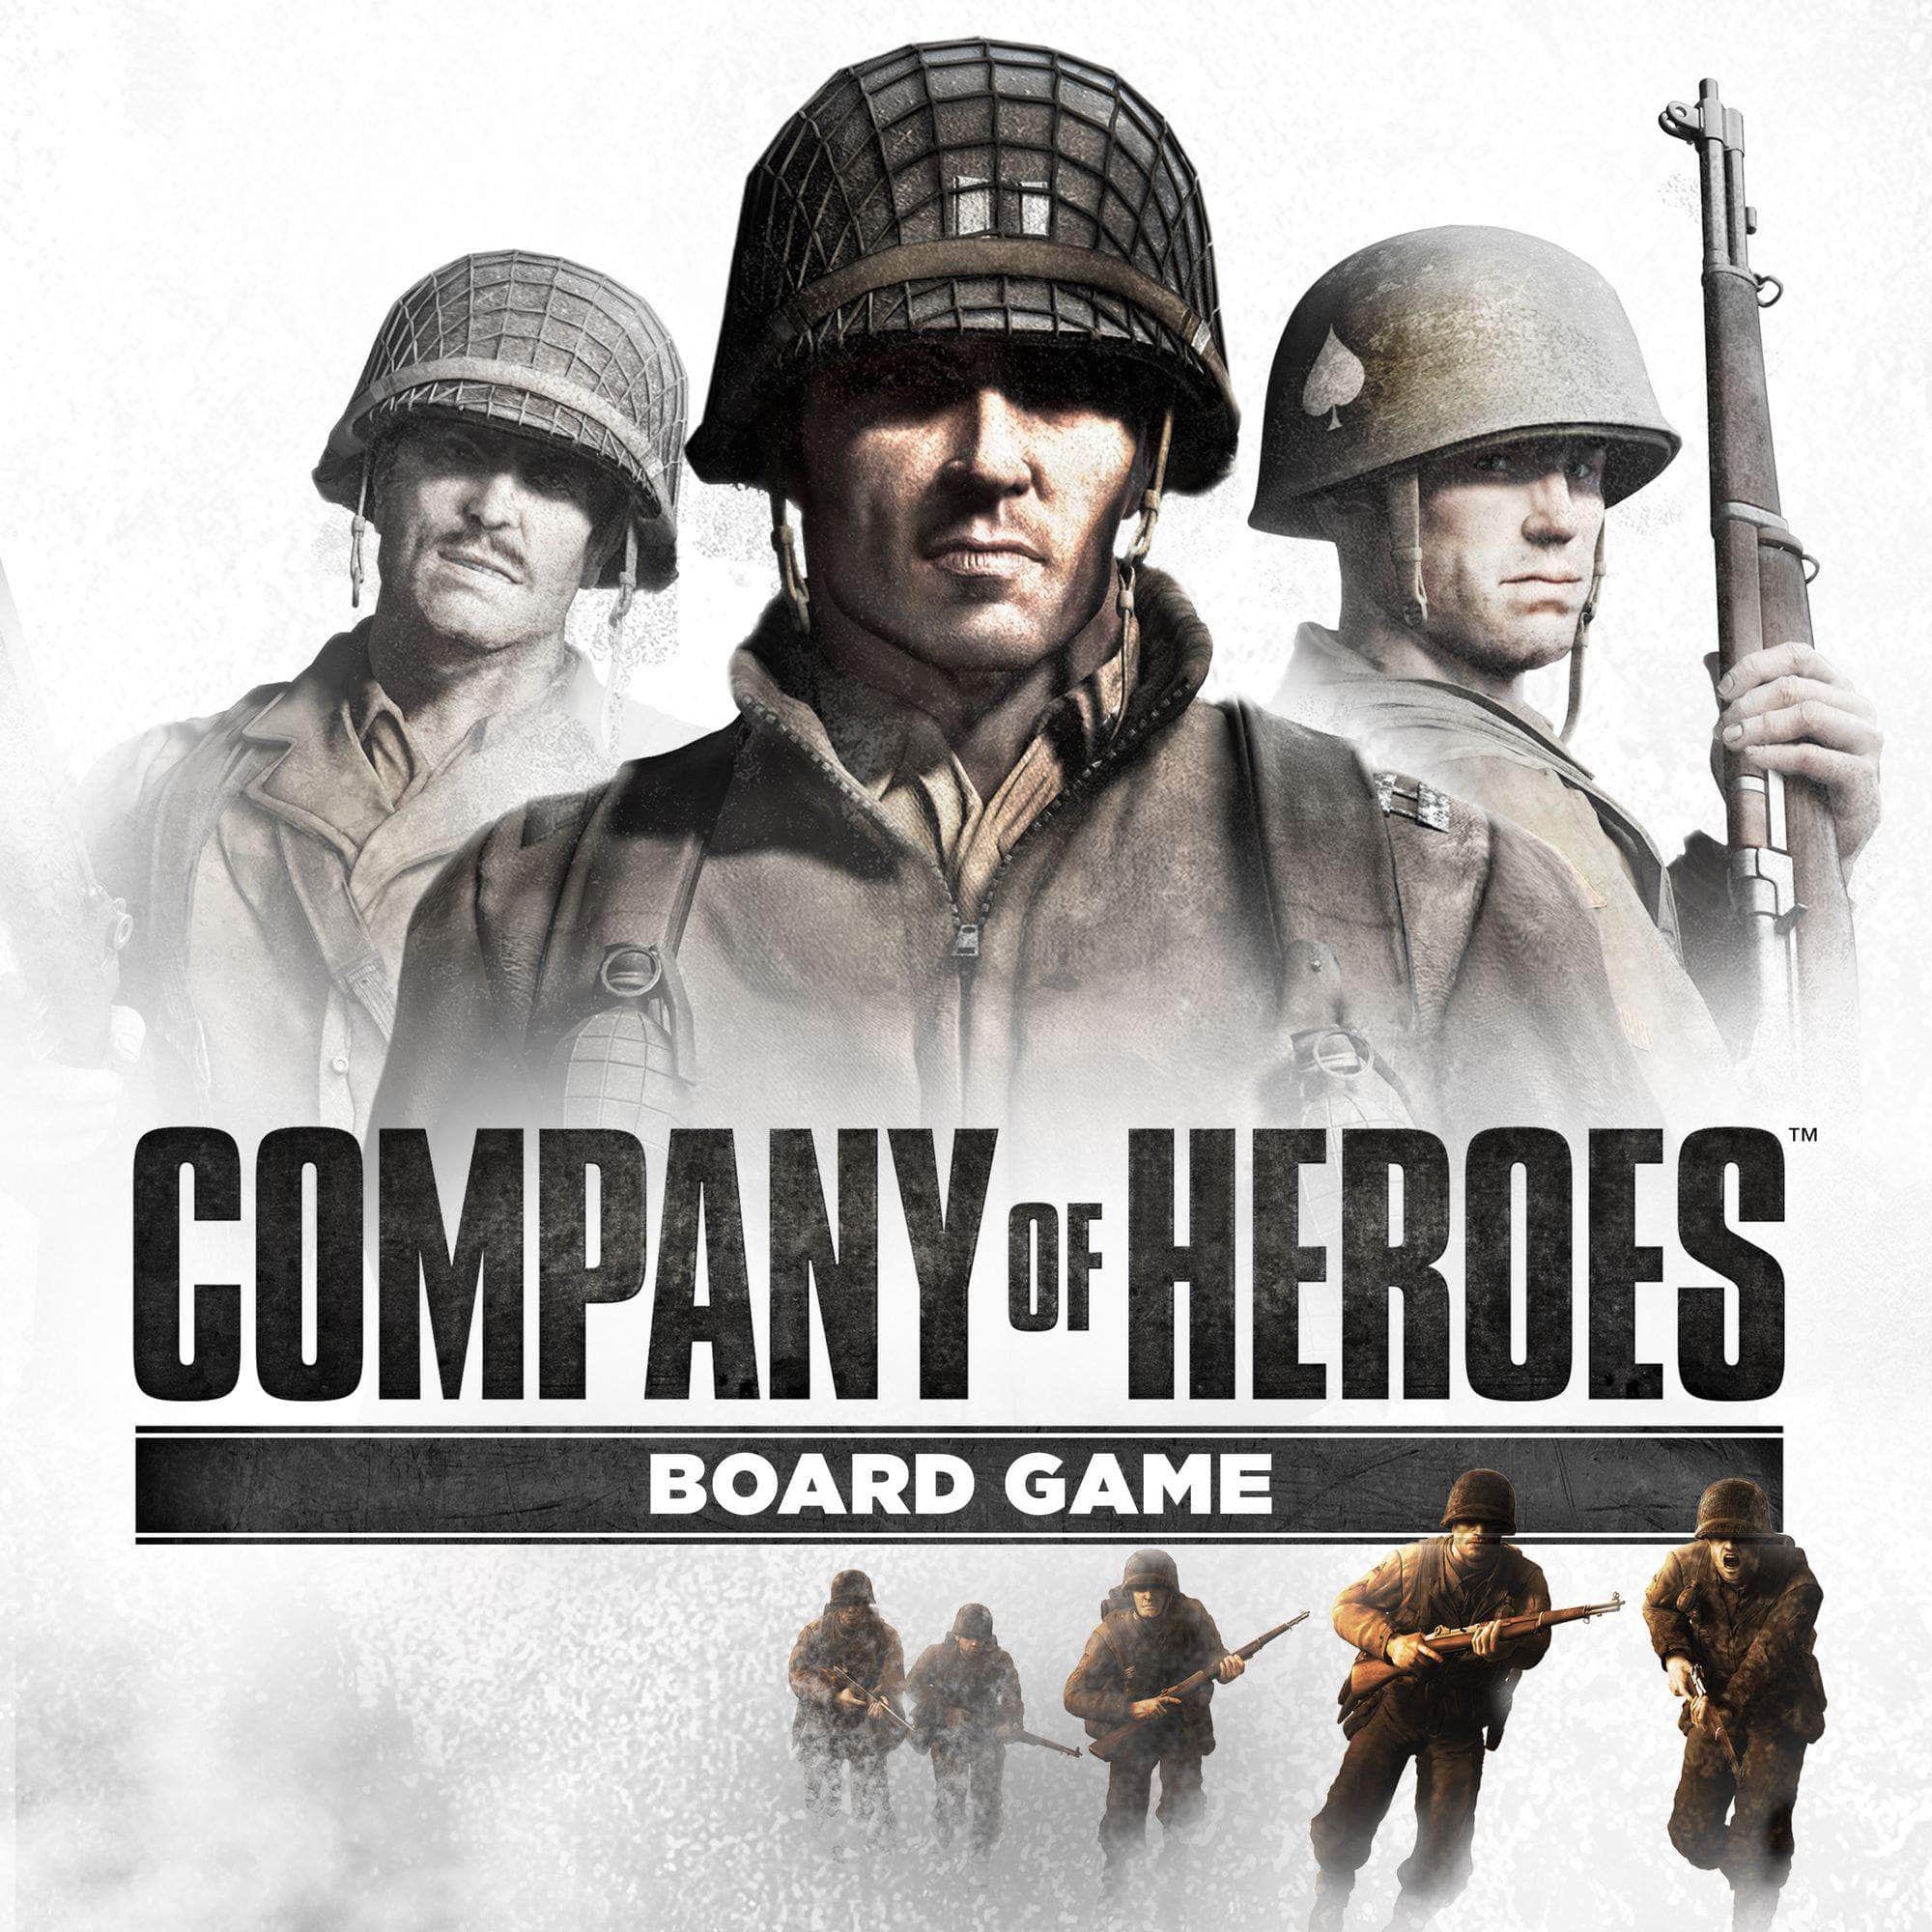 Company of Heroes: Okw Collector's Bundle (Kickstarter Special) jogo de tabuleiro Kickstarter Bad Crow Games 0632726130275 KS800673A